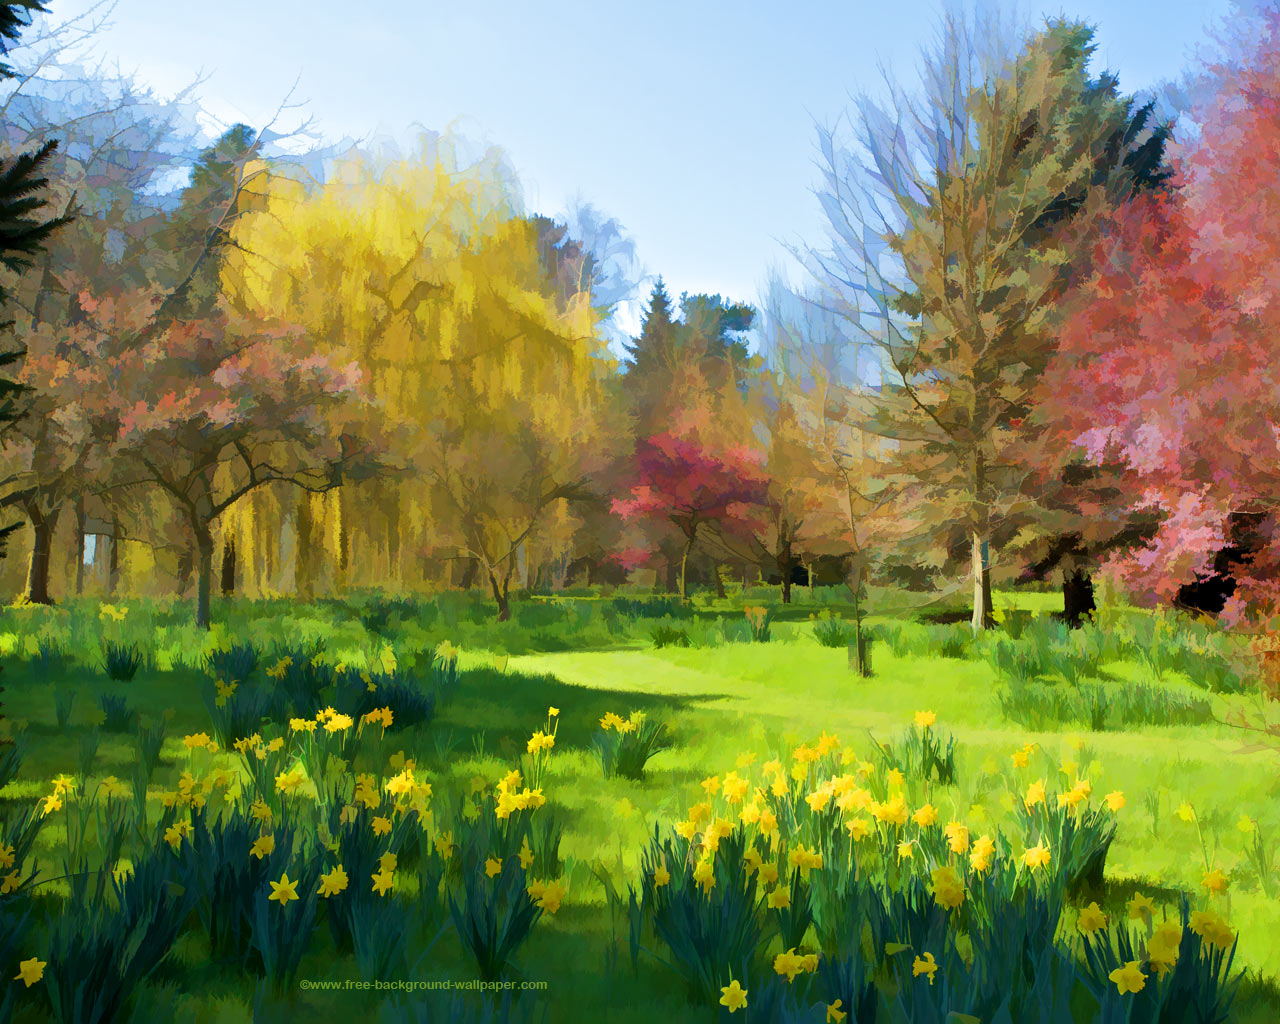 Gardens in Spring   Artistic Background Wallpaper   1280x1024 pixels